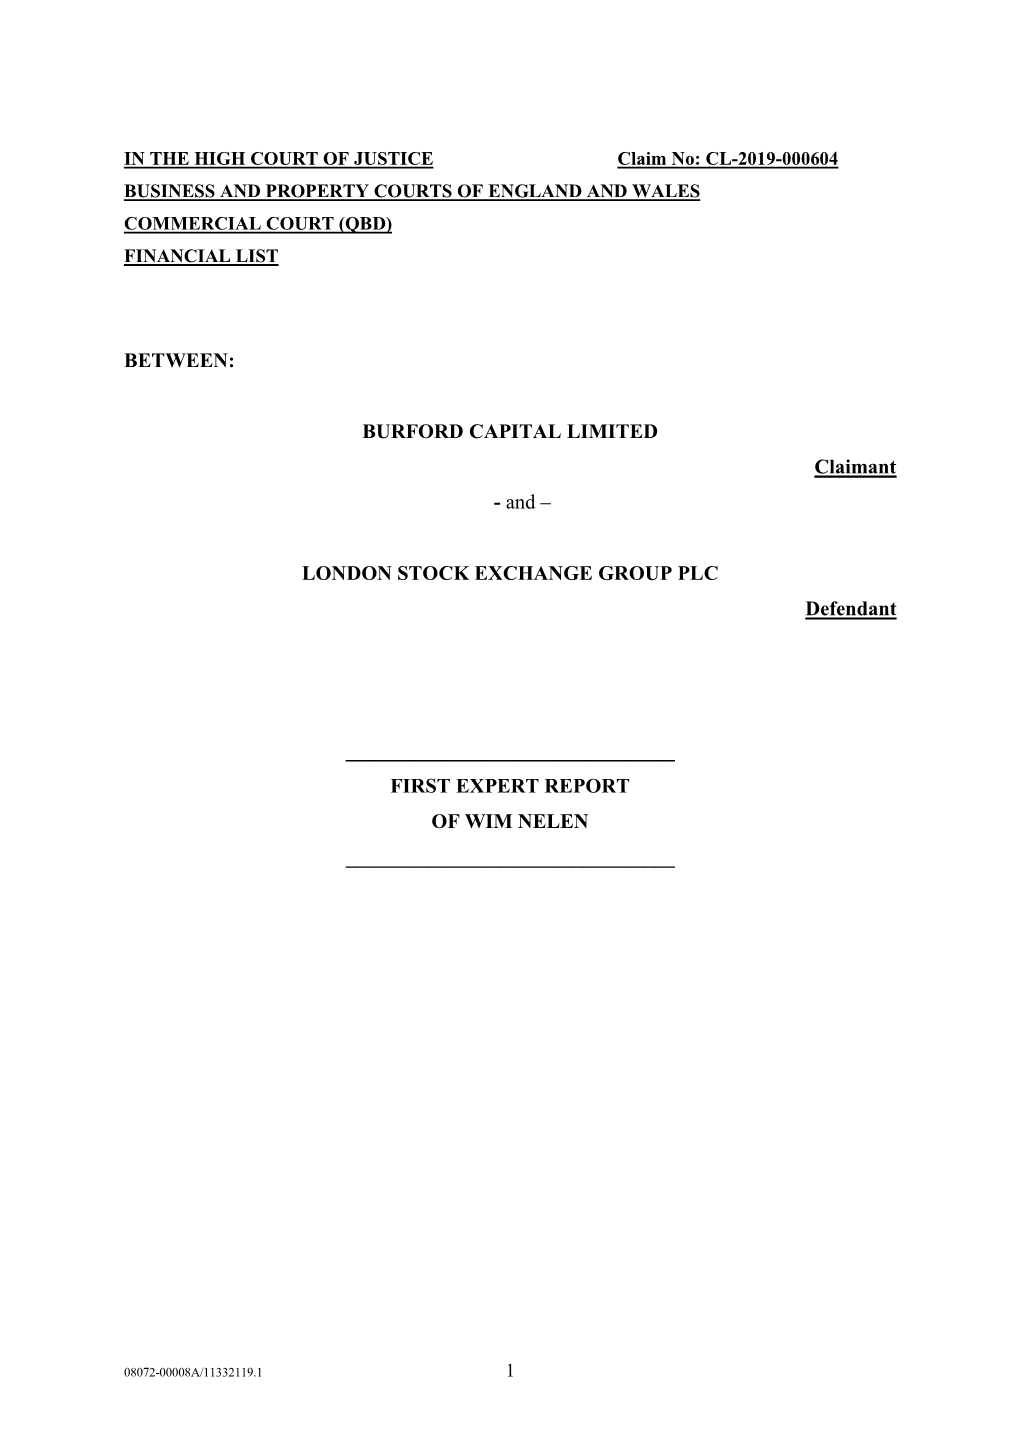 LONDON STOCK EXCHANGE GROUP PLC Defendant